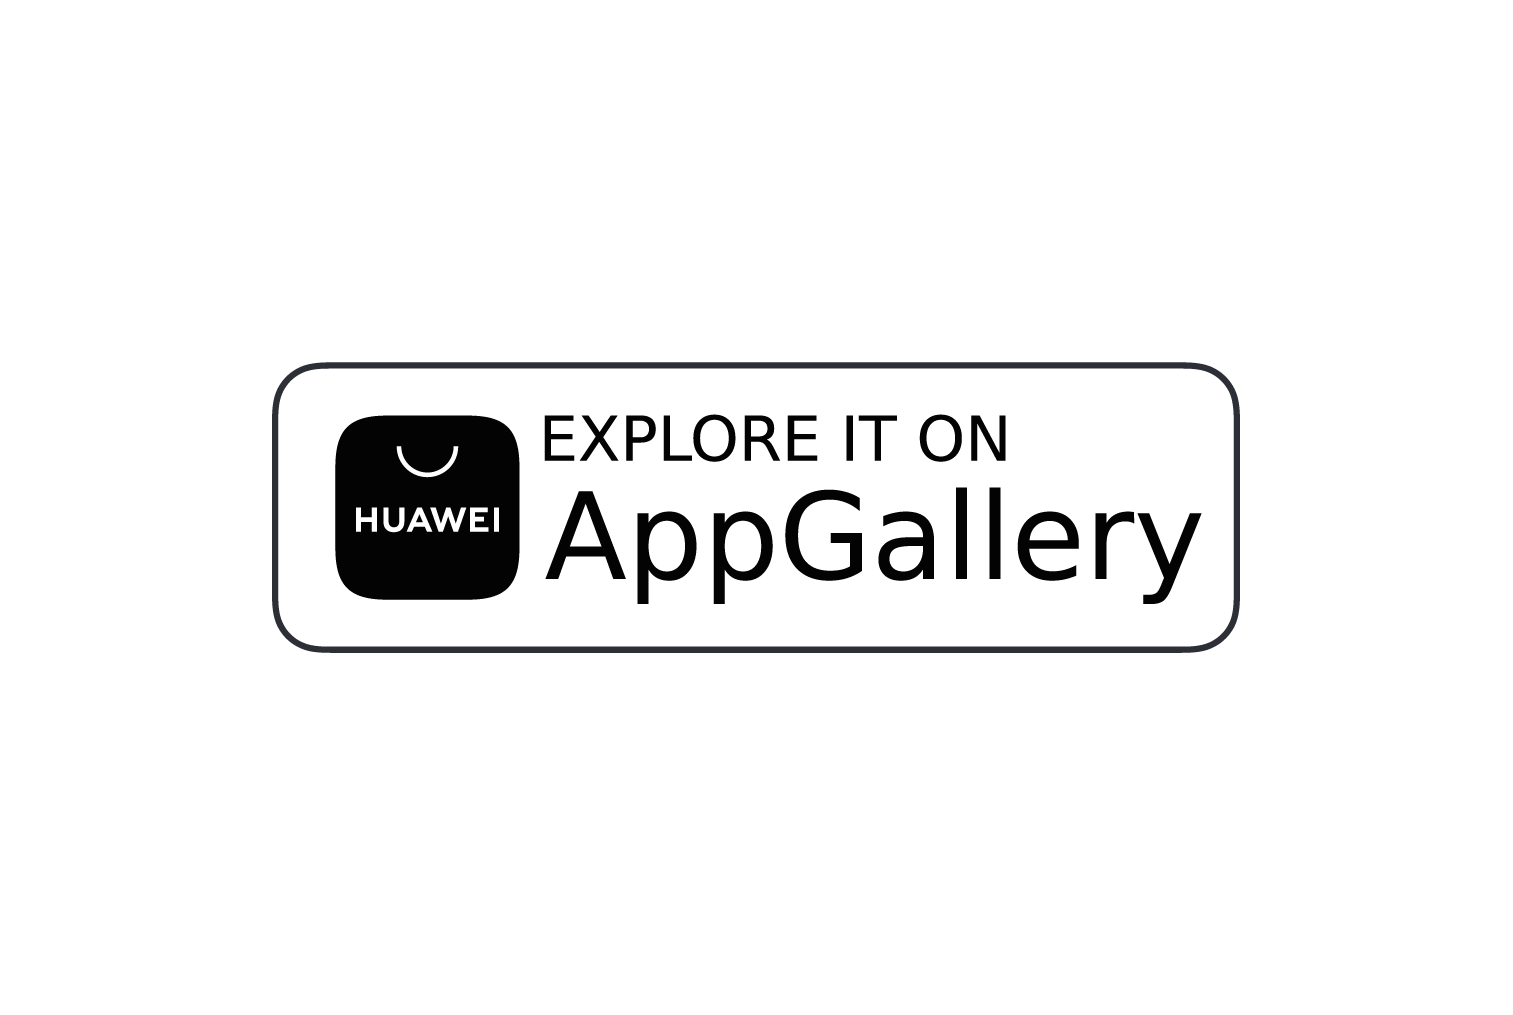 Https appgallery huawei ru. App Gallery логотип. Хуавей APPGALLERY. Huawei app Gallery значок. Откройте в app Gallery svg.